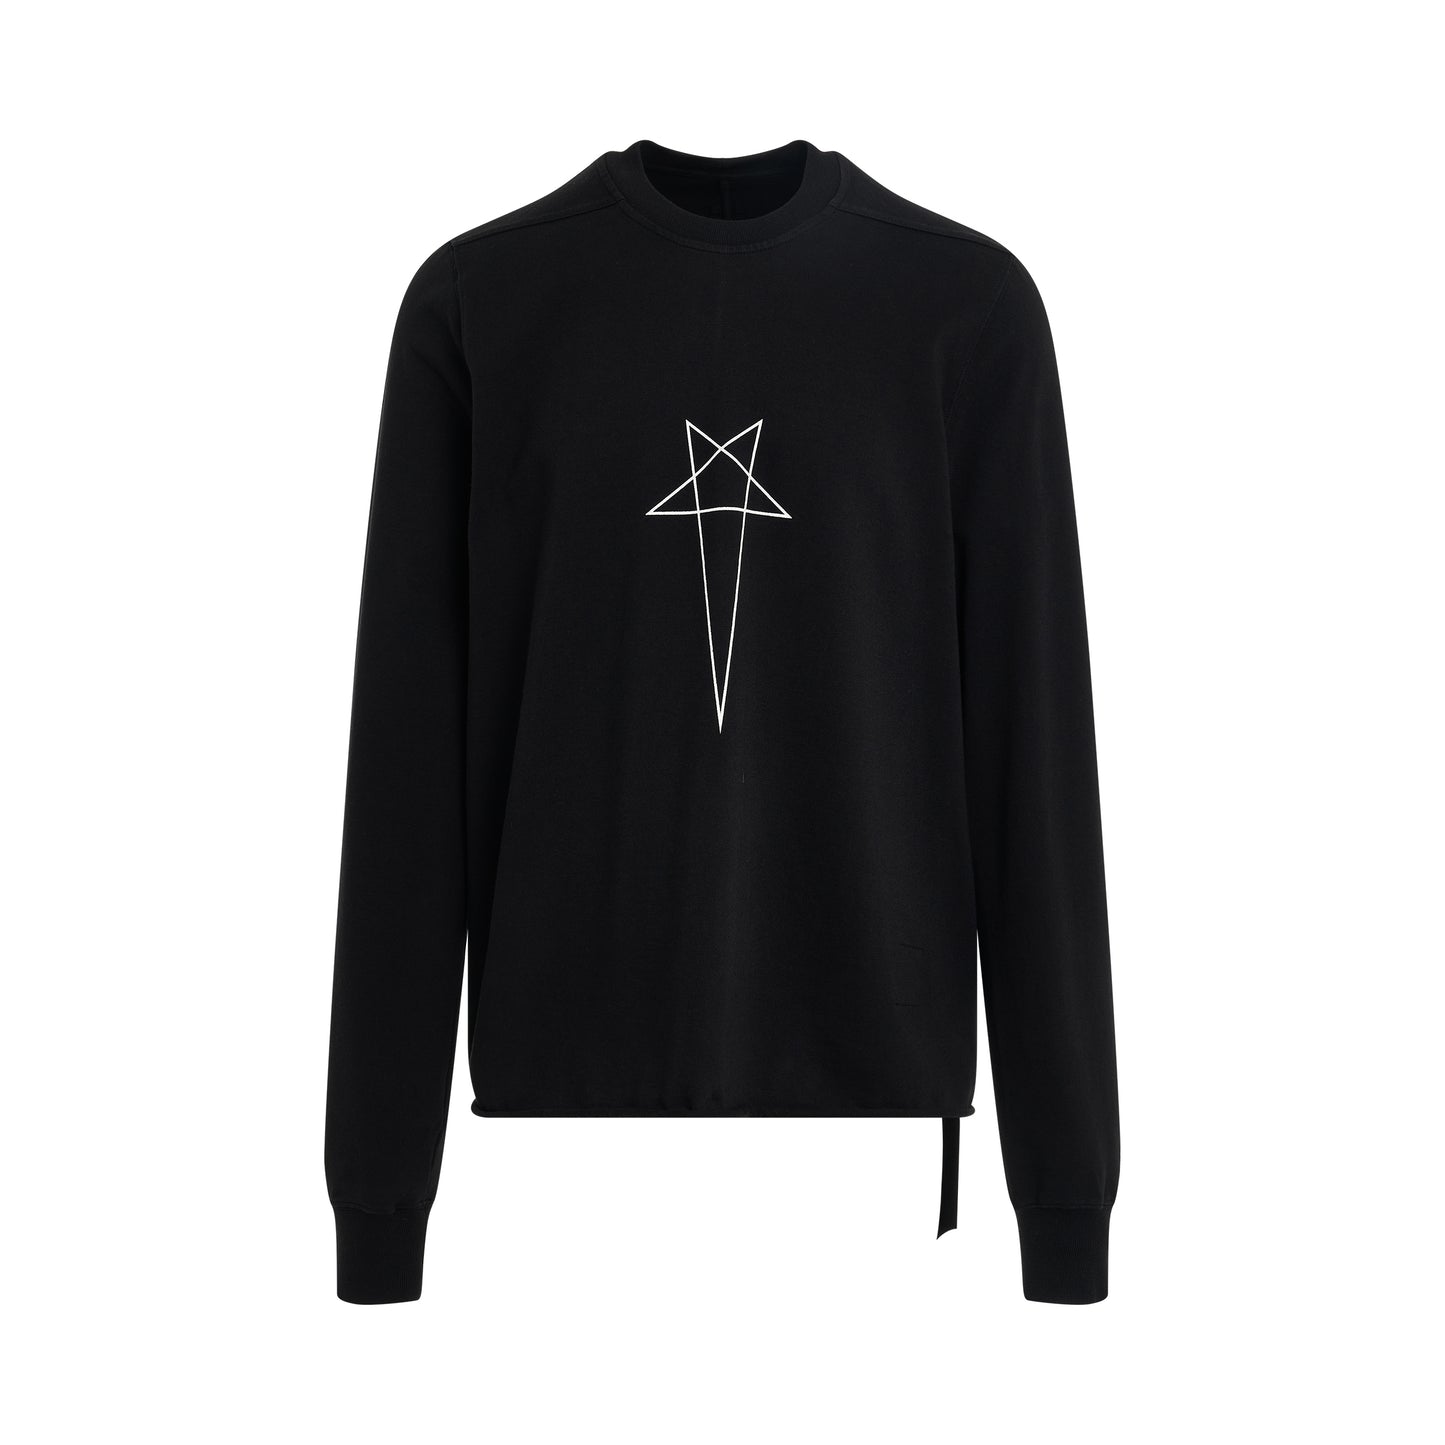 Pentagram Print Crewneck Sweatshirt in Black/Milk